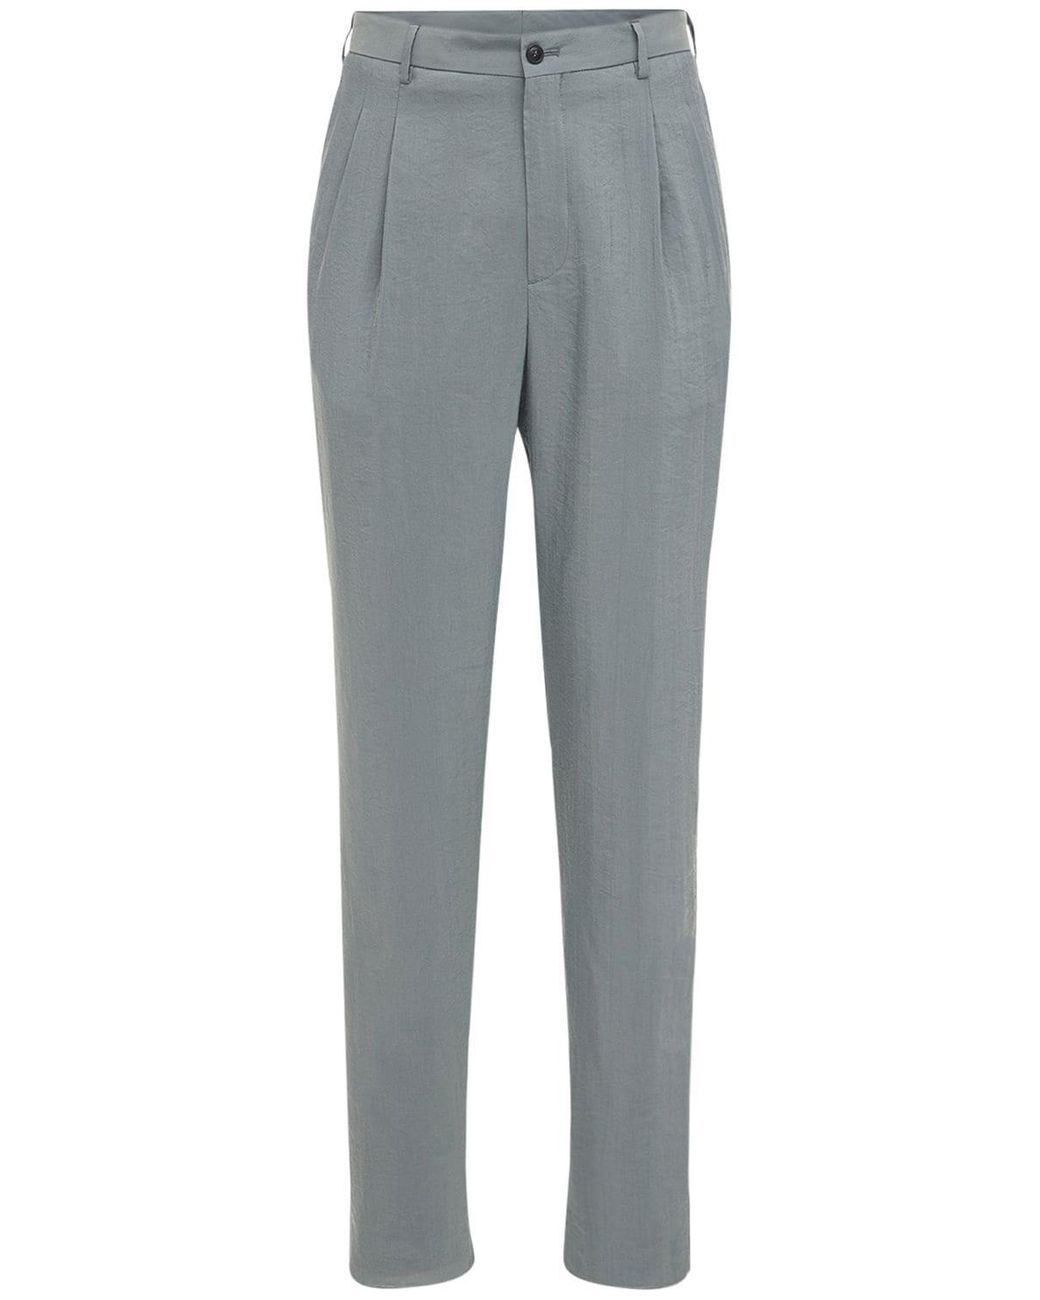 Giorgio Armani Silk Blend Solid Twill Pants in Grey (Gray) for Men - Lyst